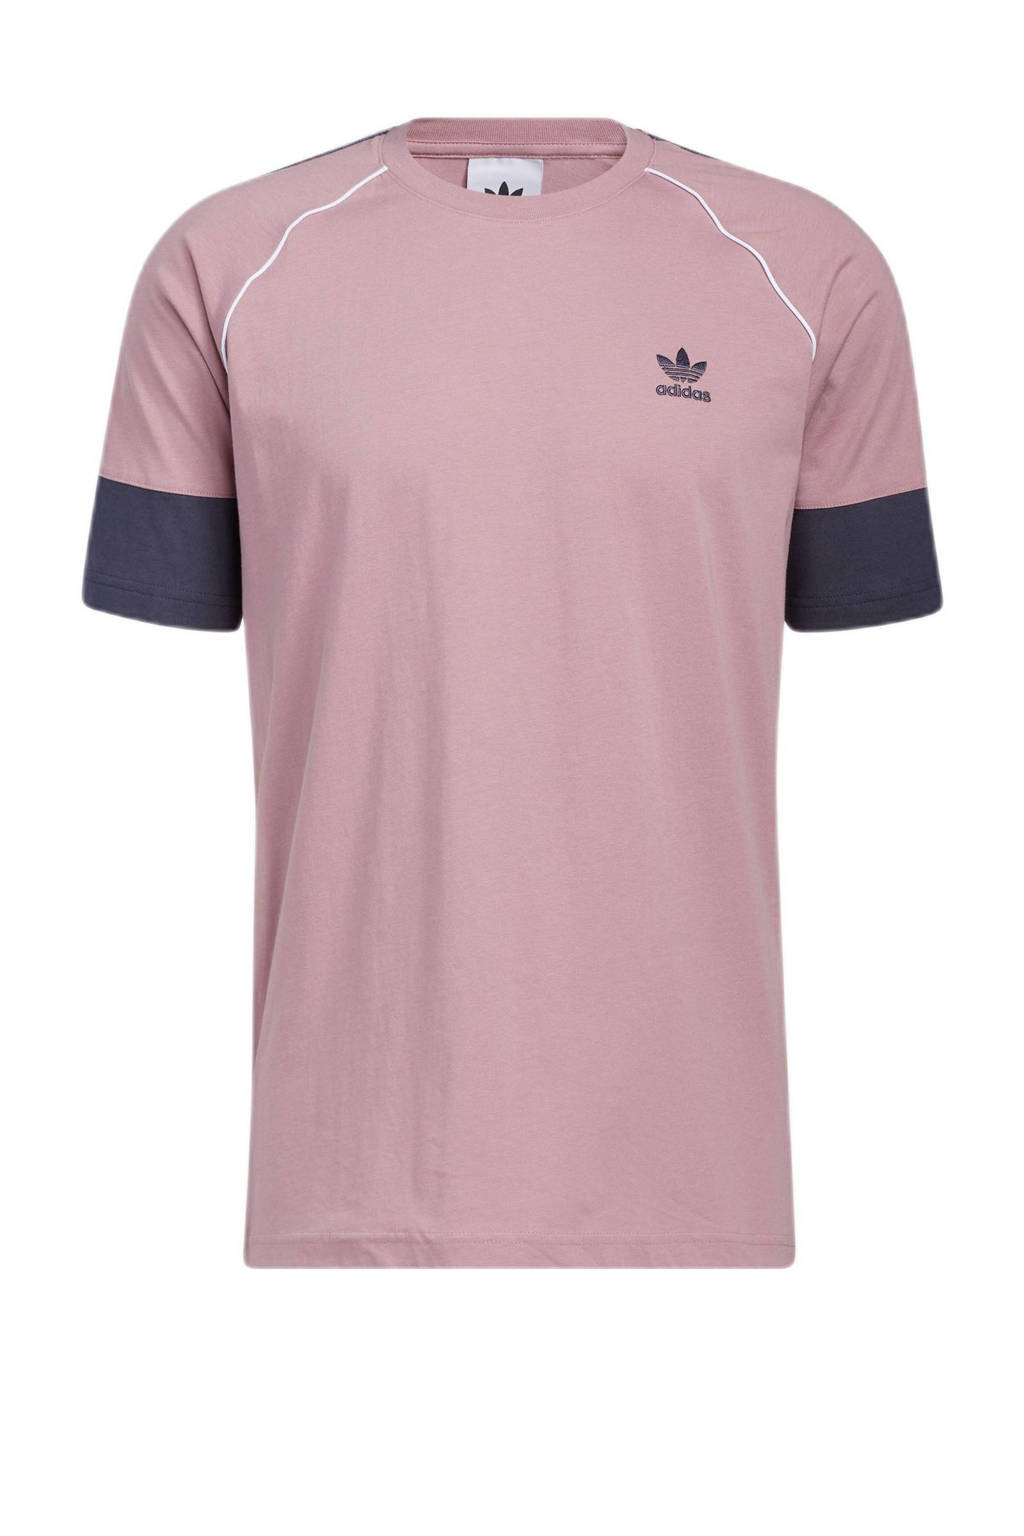 adidas Originals Superstar T-shirt roze/donkerblauw